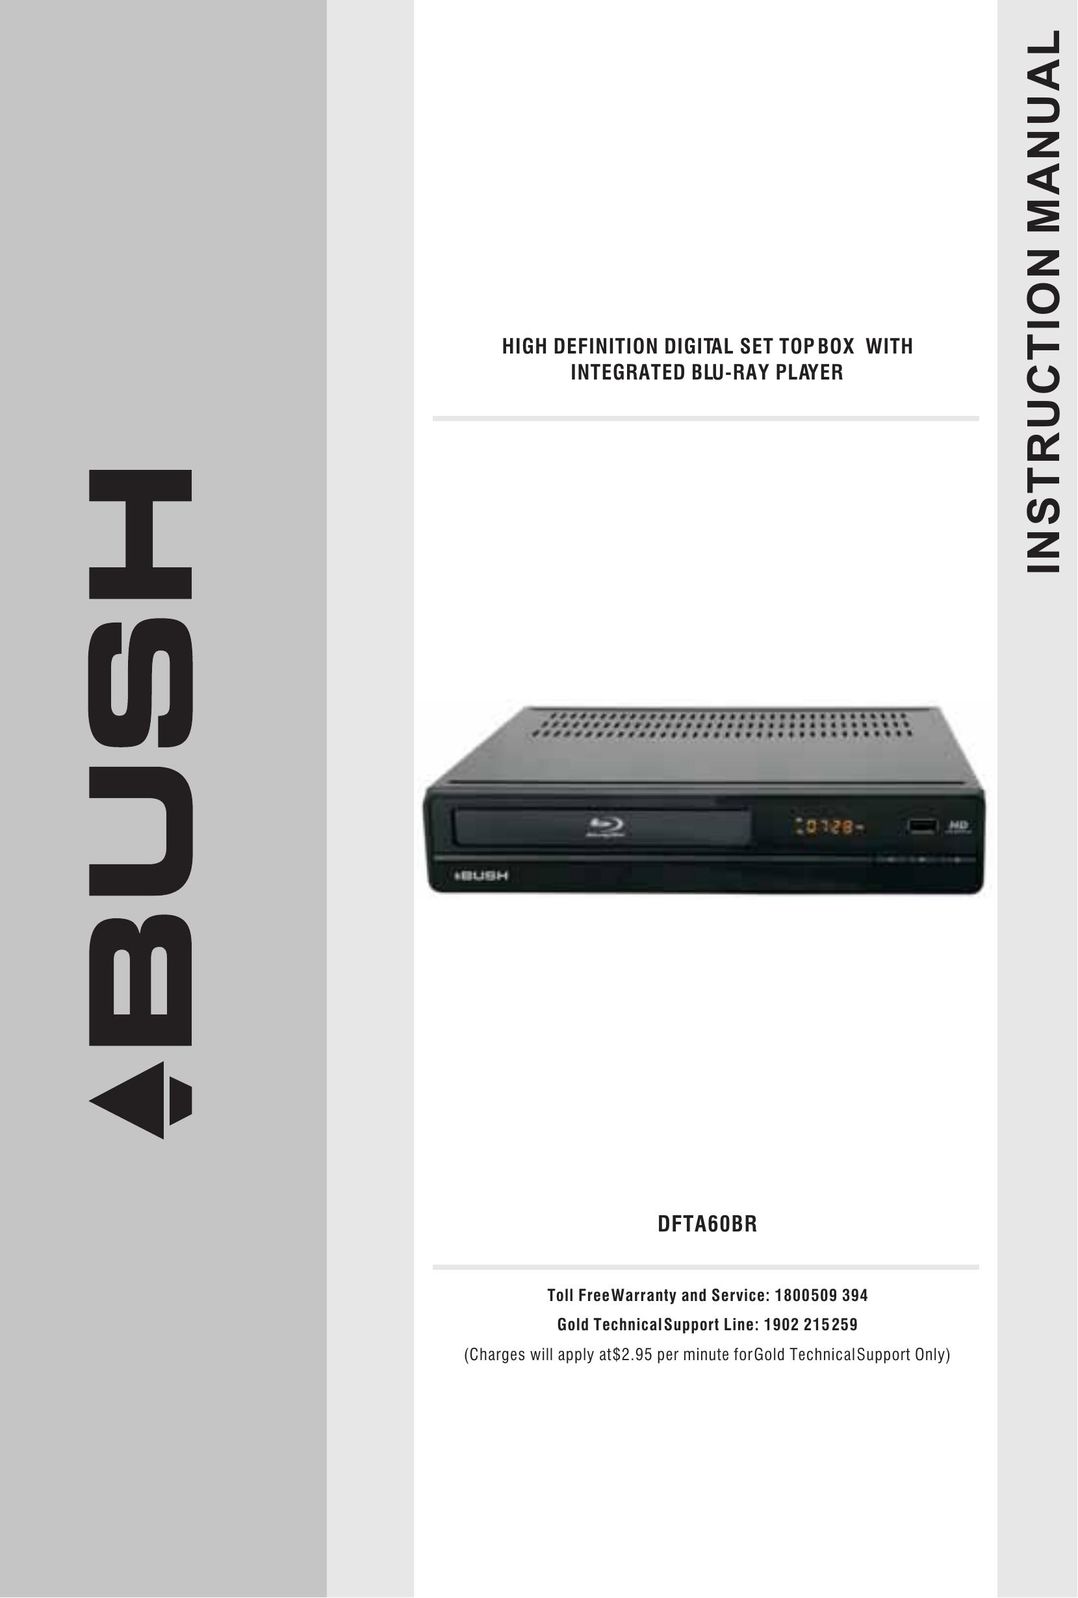 Bush DFTA60BR Blu-ray Player User Manual (Page 1)